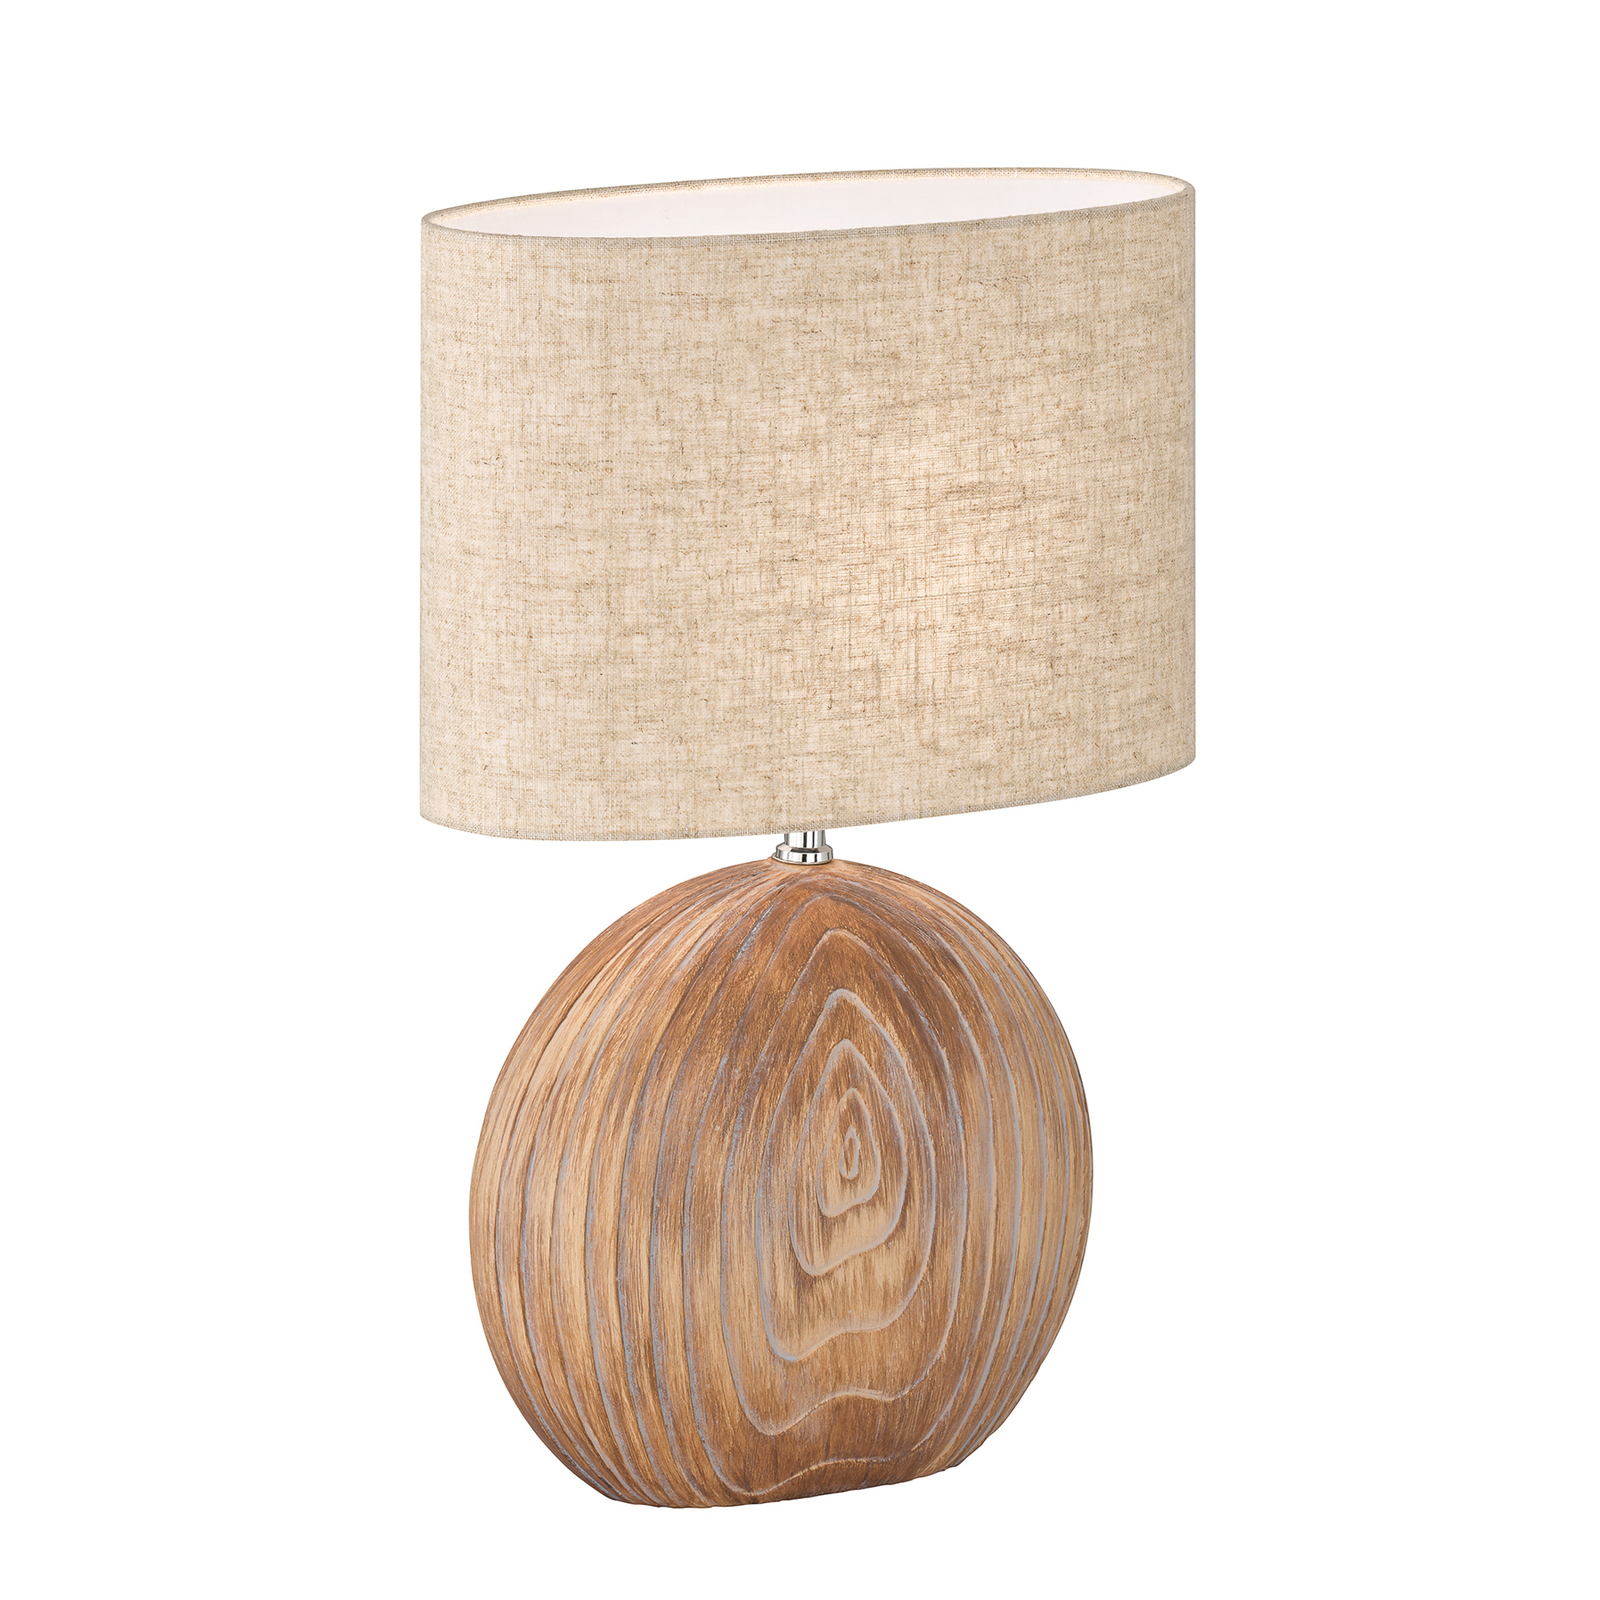 Tobse table lamp, wood-coloured/sand, 53 cm high